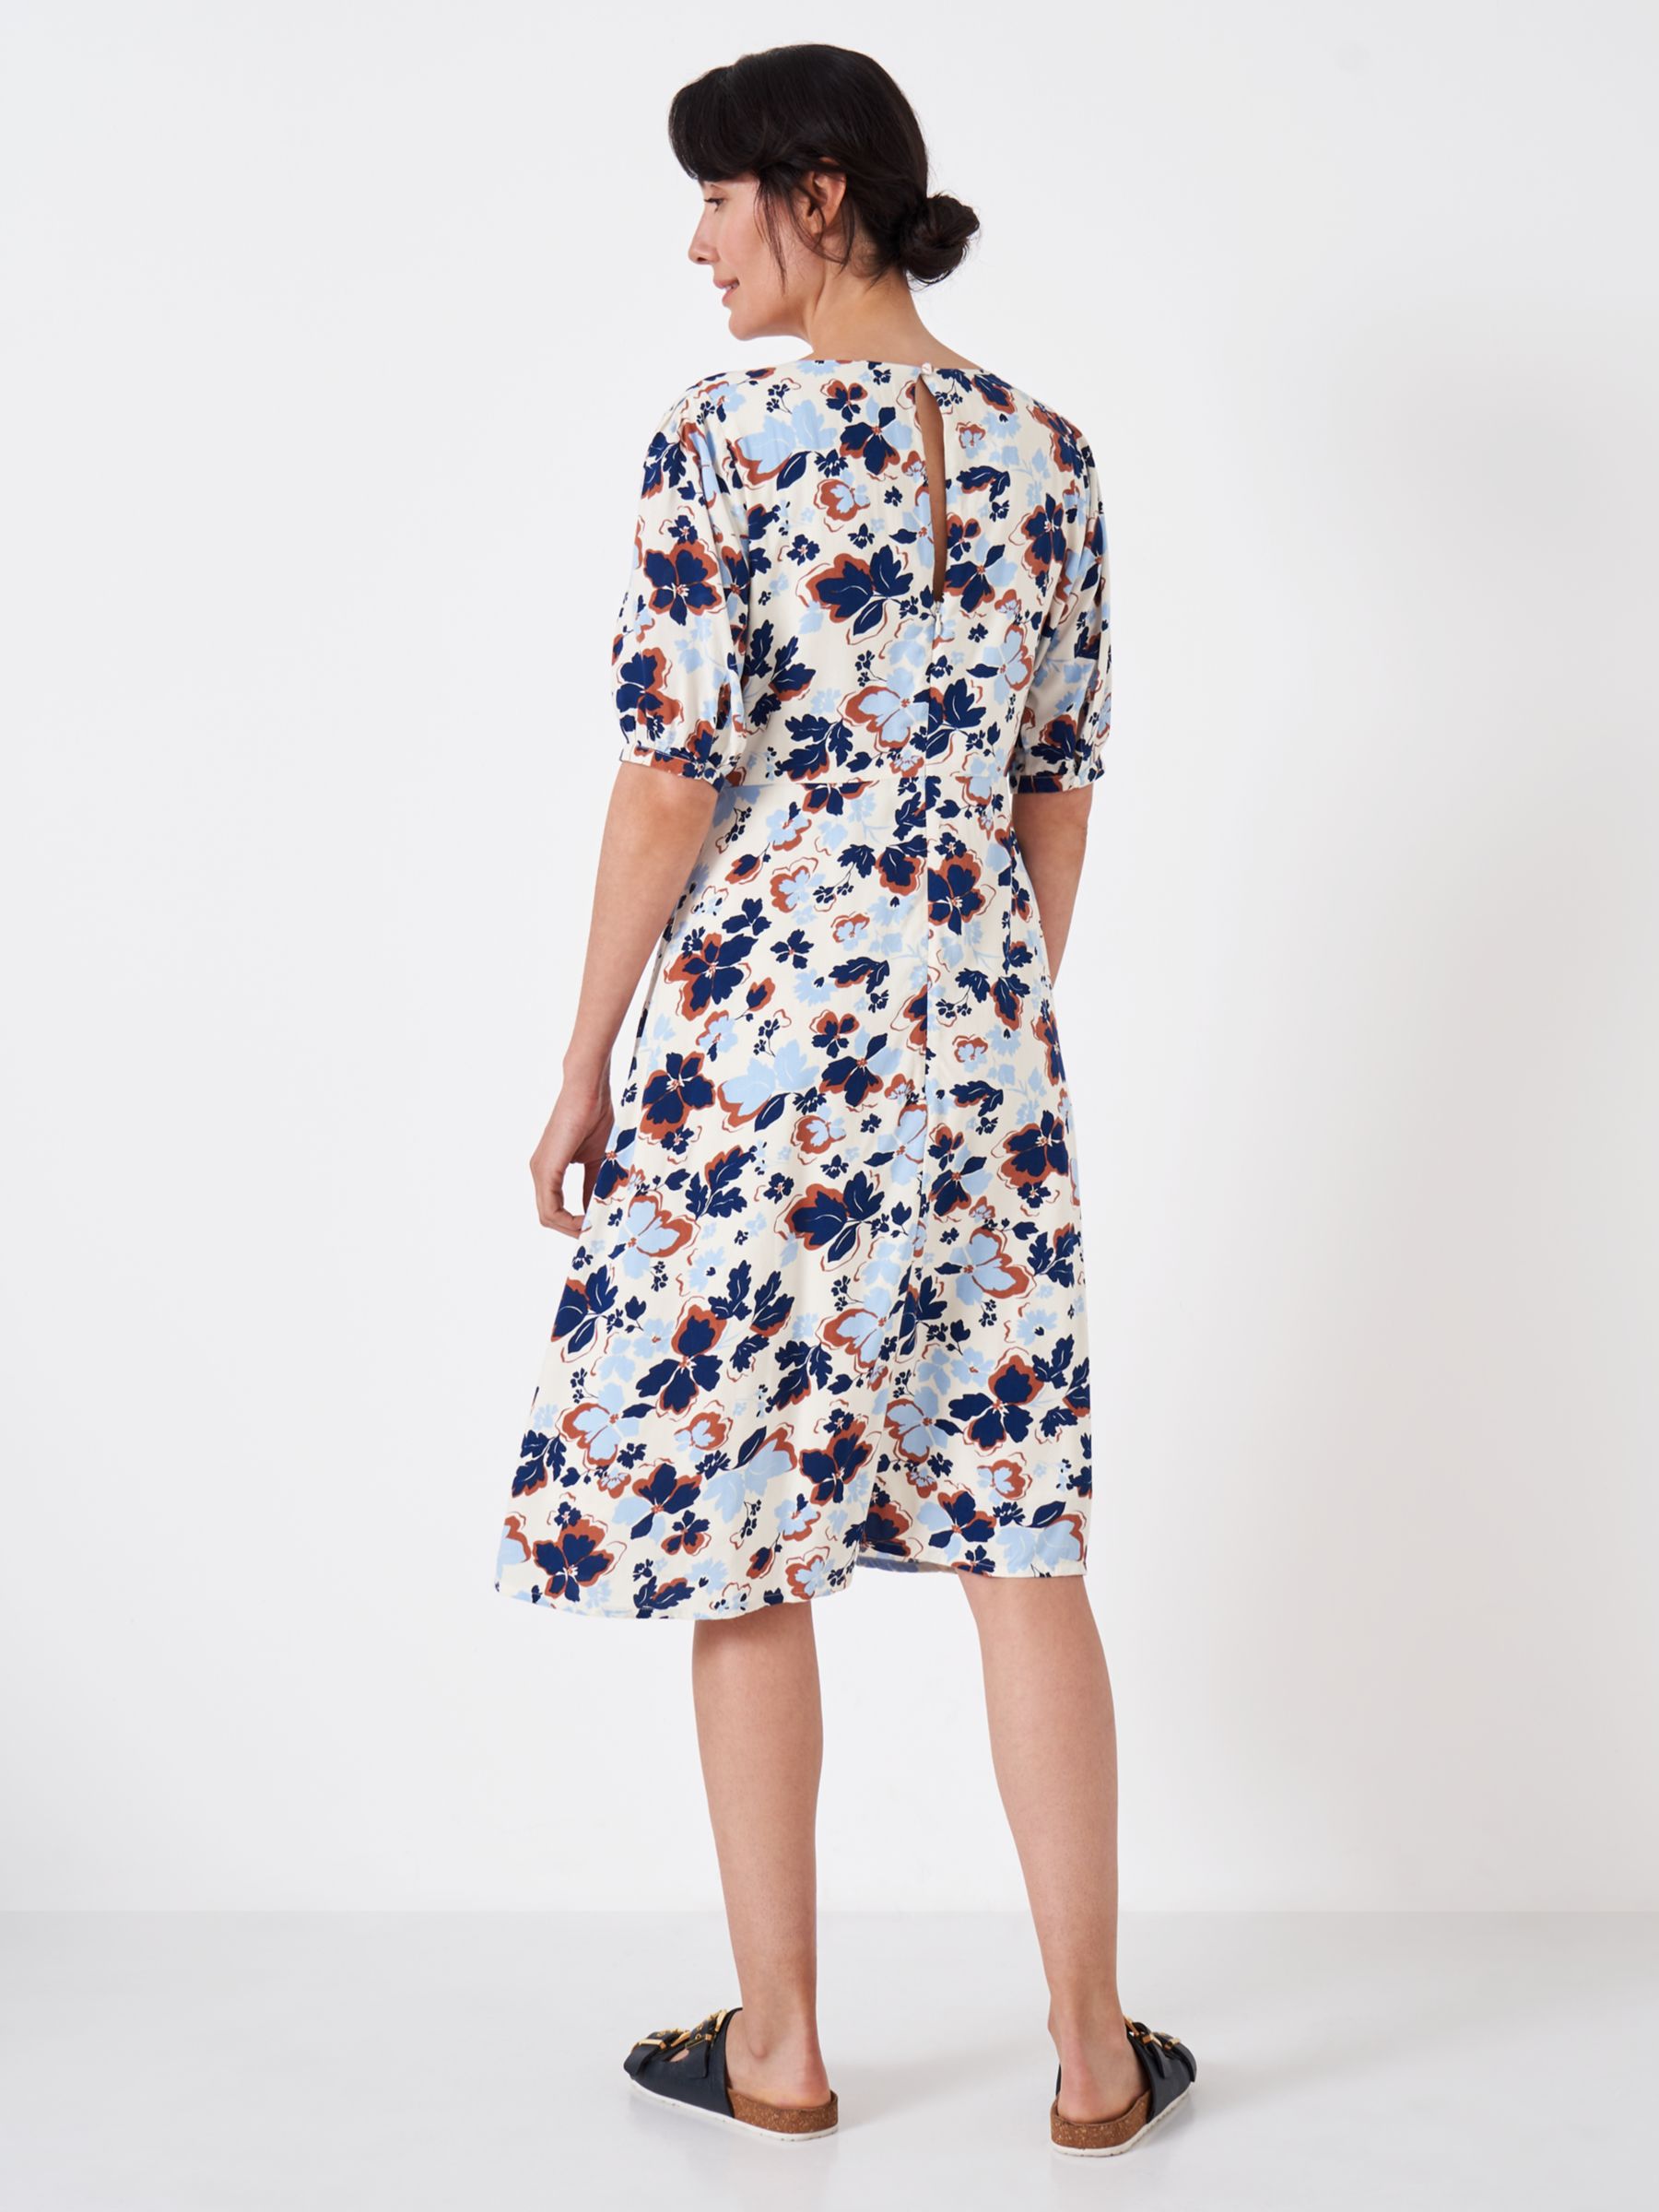 Crew Clothing Tori Floral Print Dress, Beige/Multi, 6